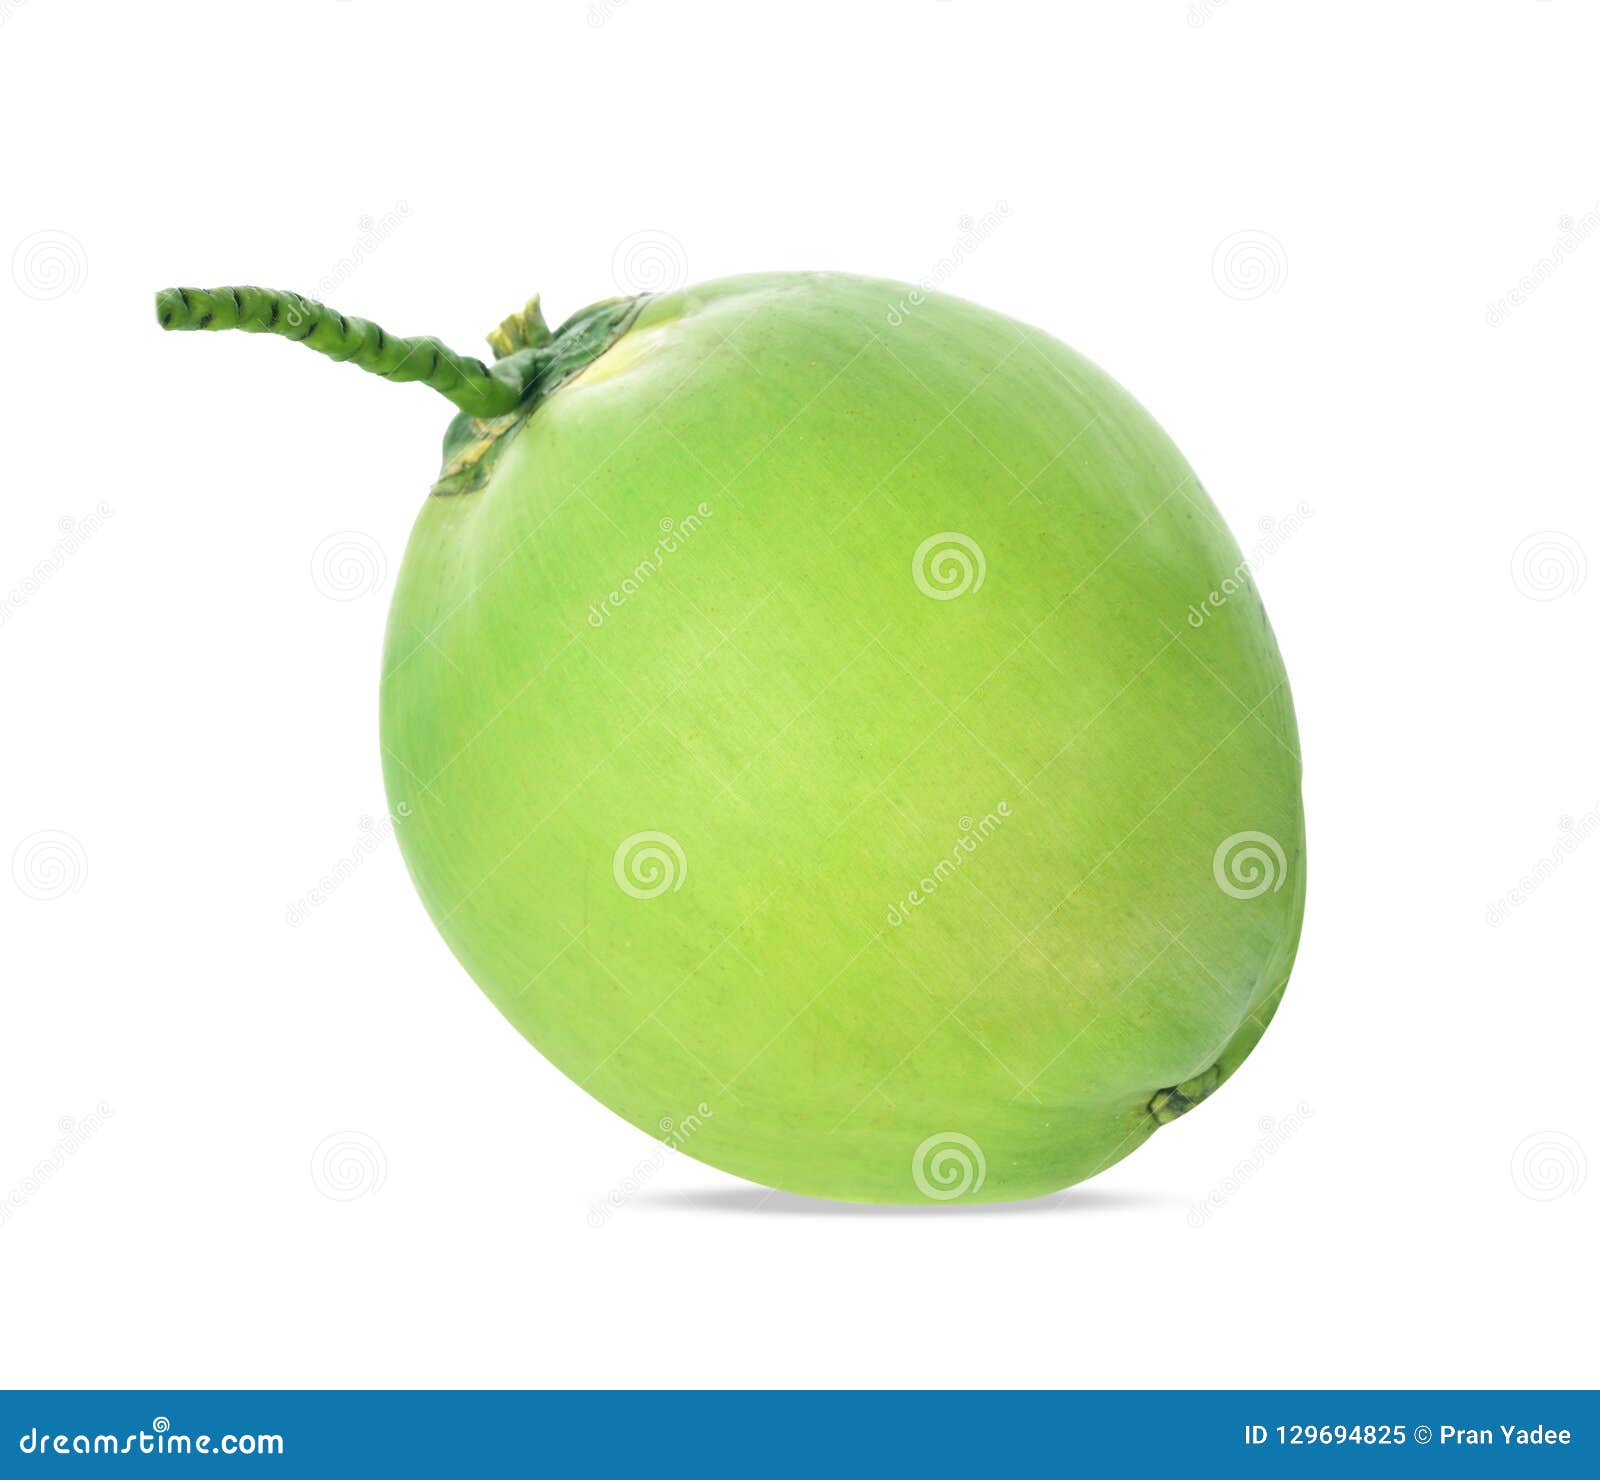 Green Coconut Isolated on White Background Stock Image - Image of fresh ...